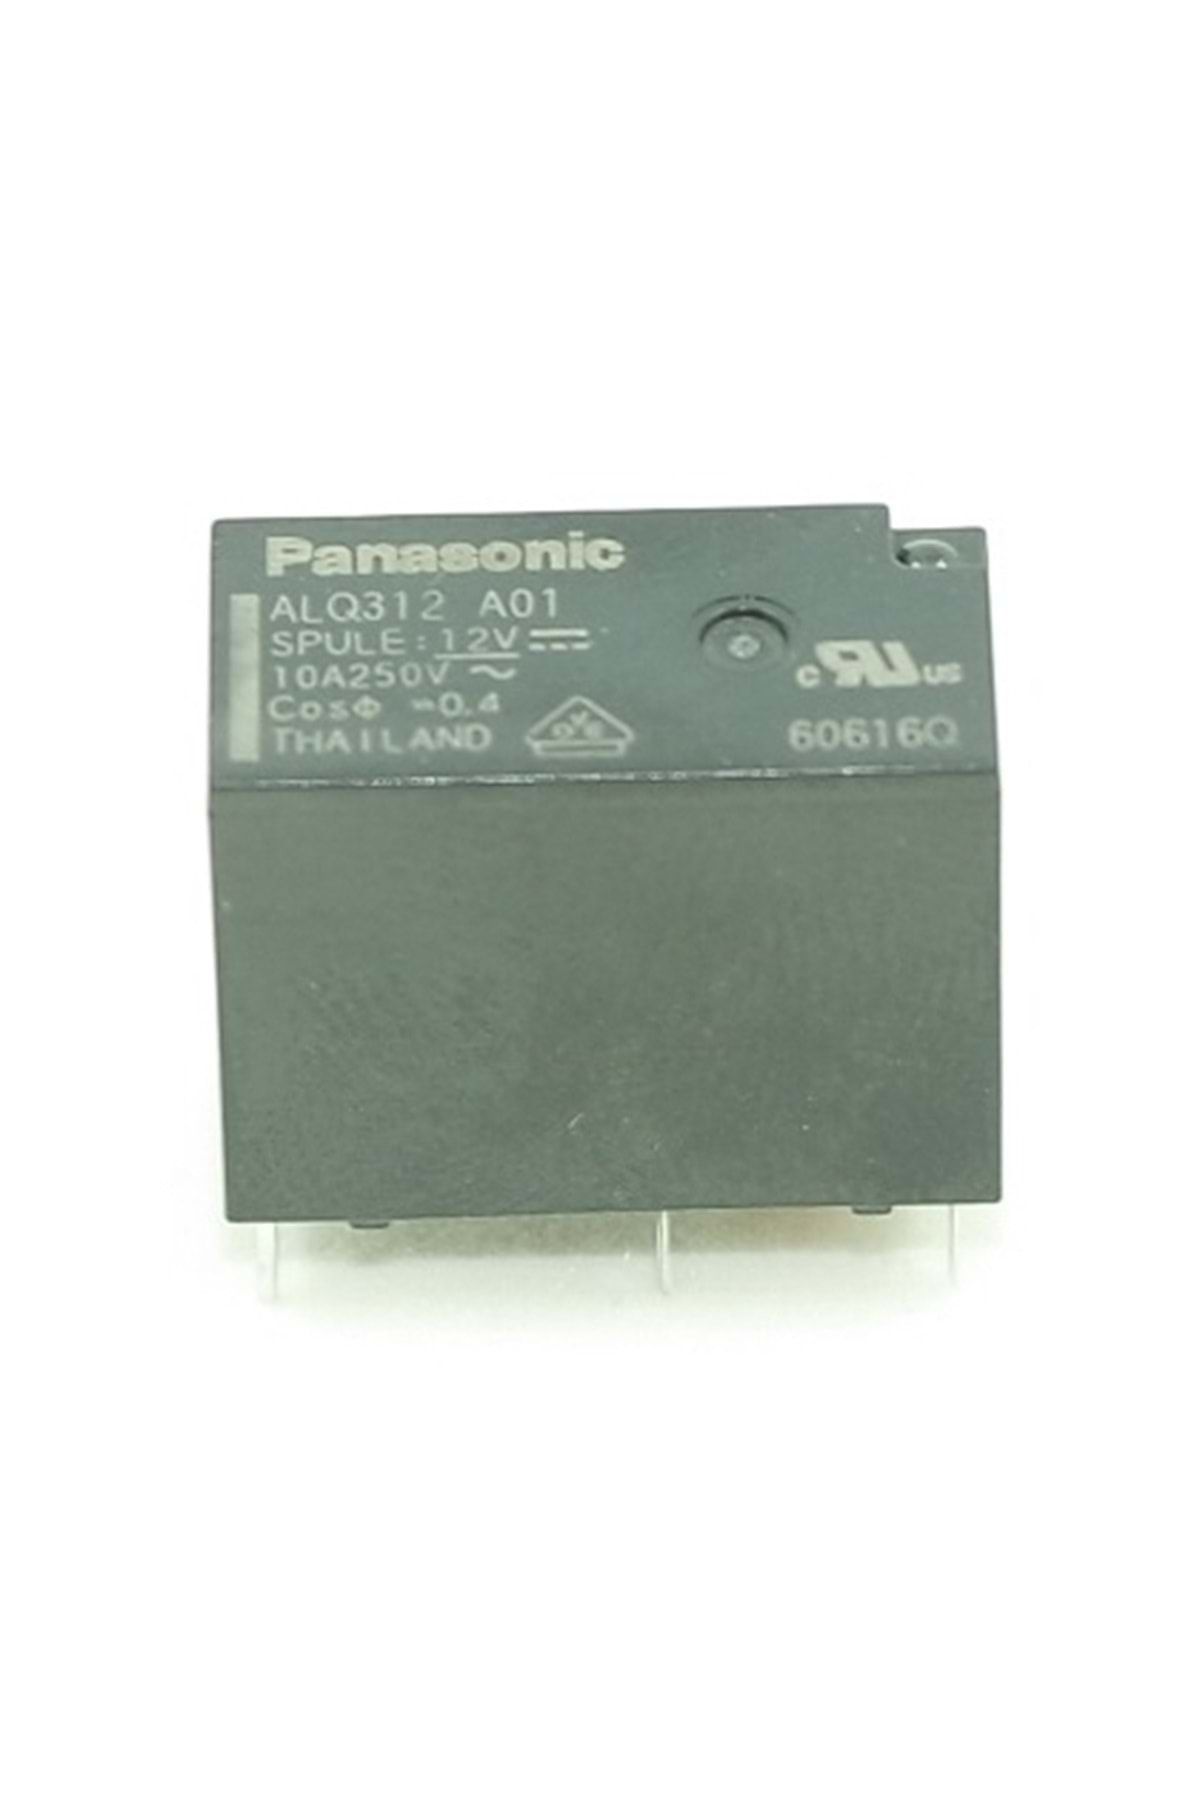 Panasonic Alq312 12 Volt Dc 10 Amper Röle